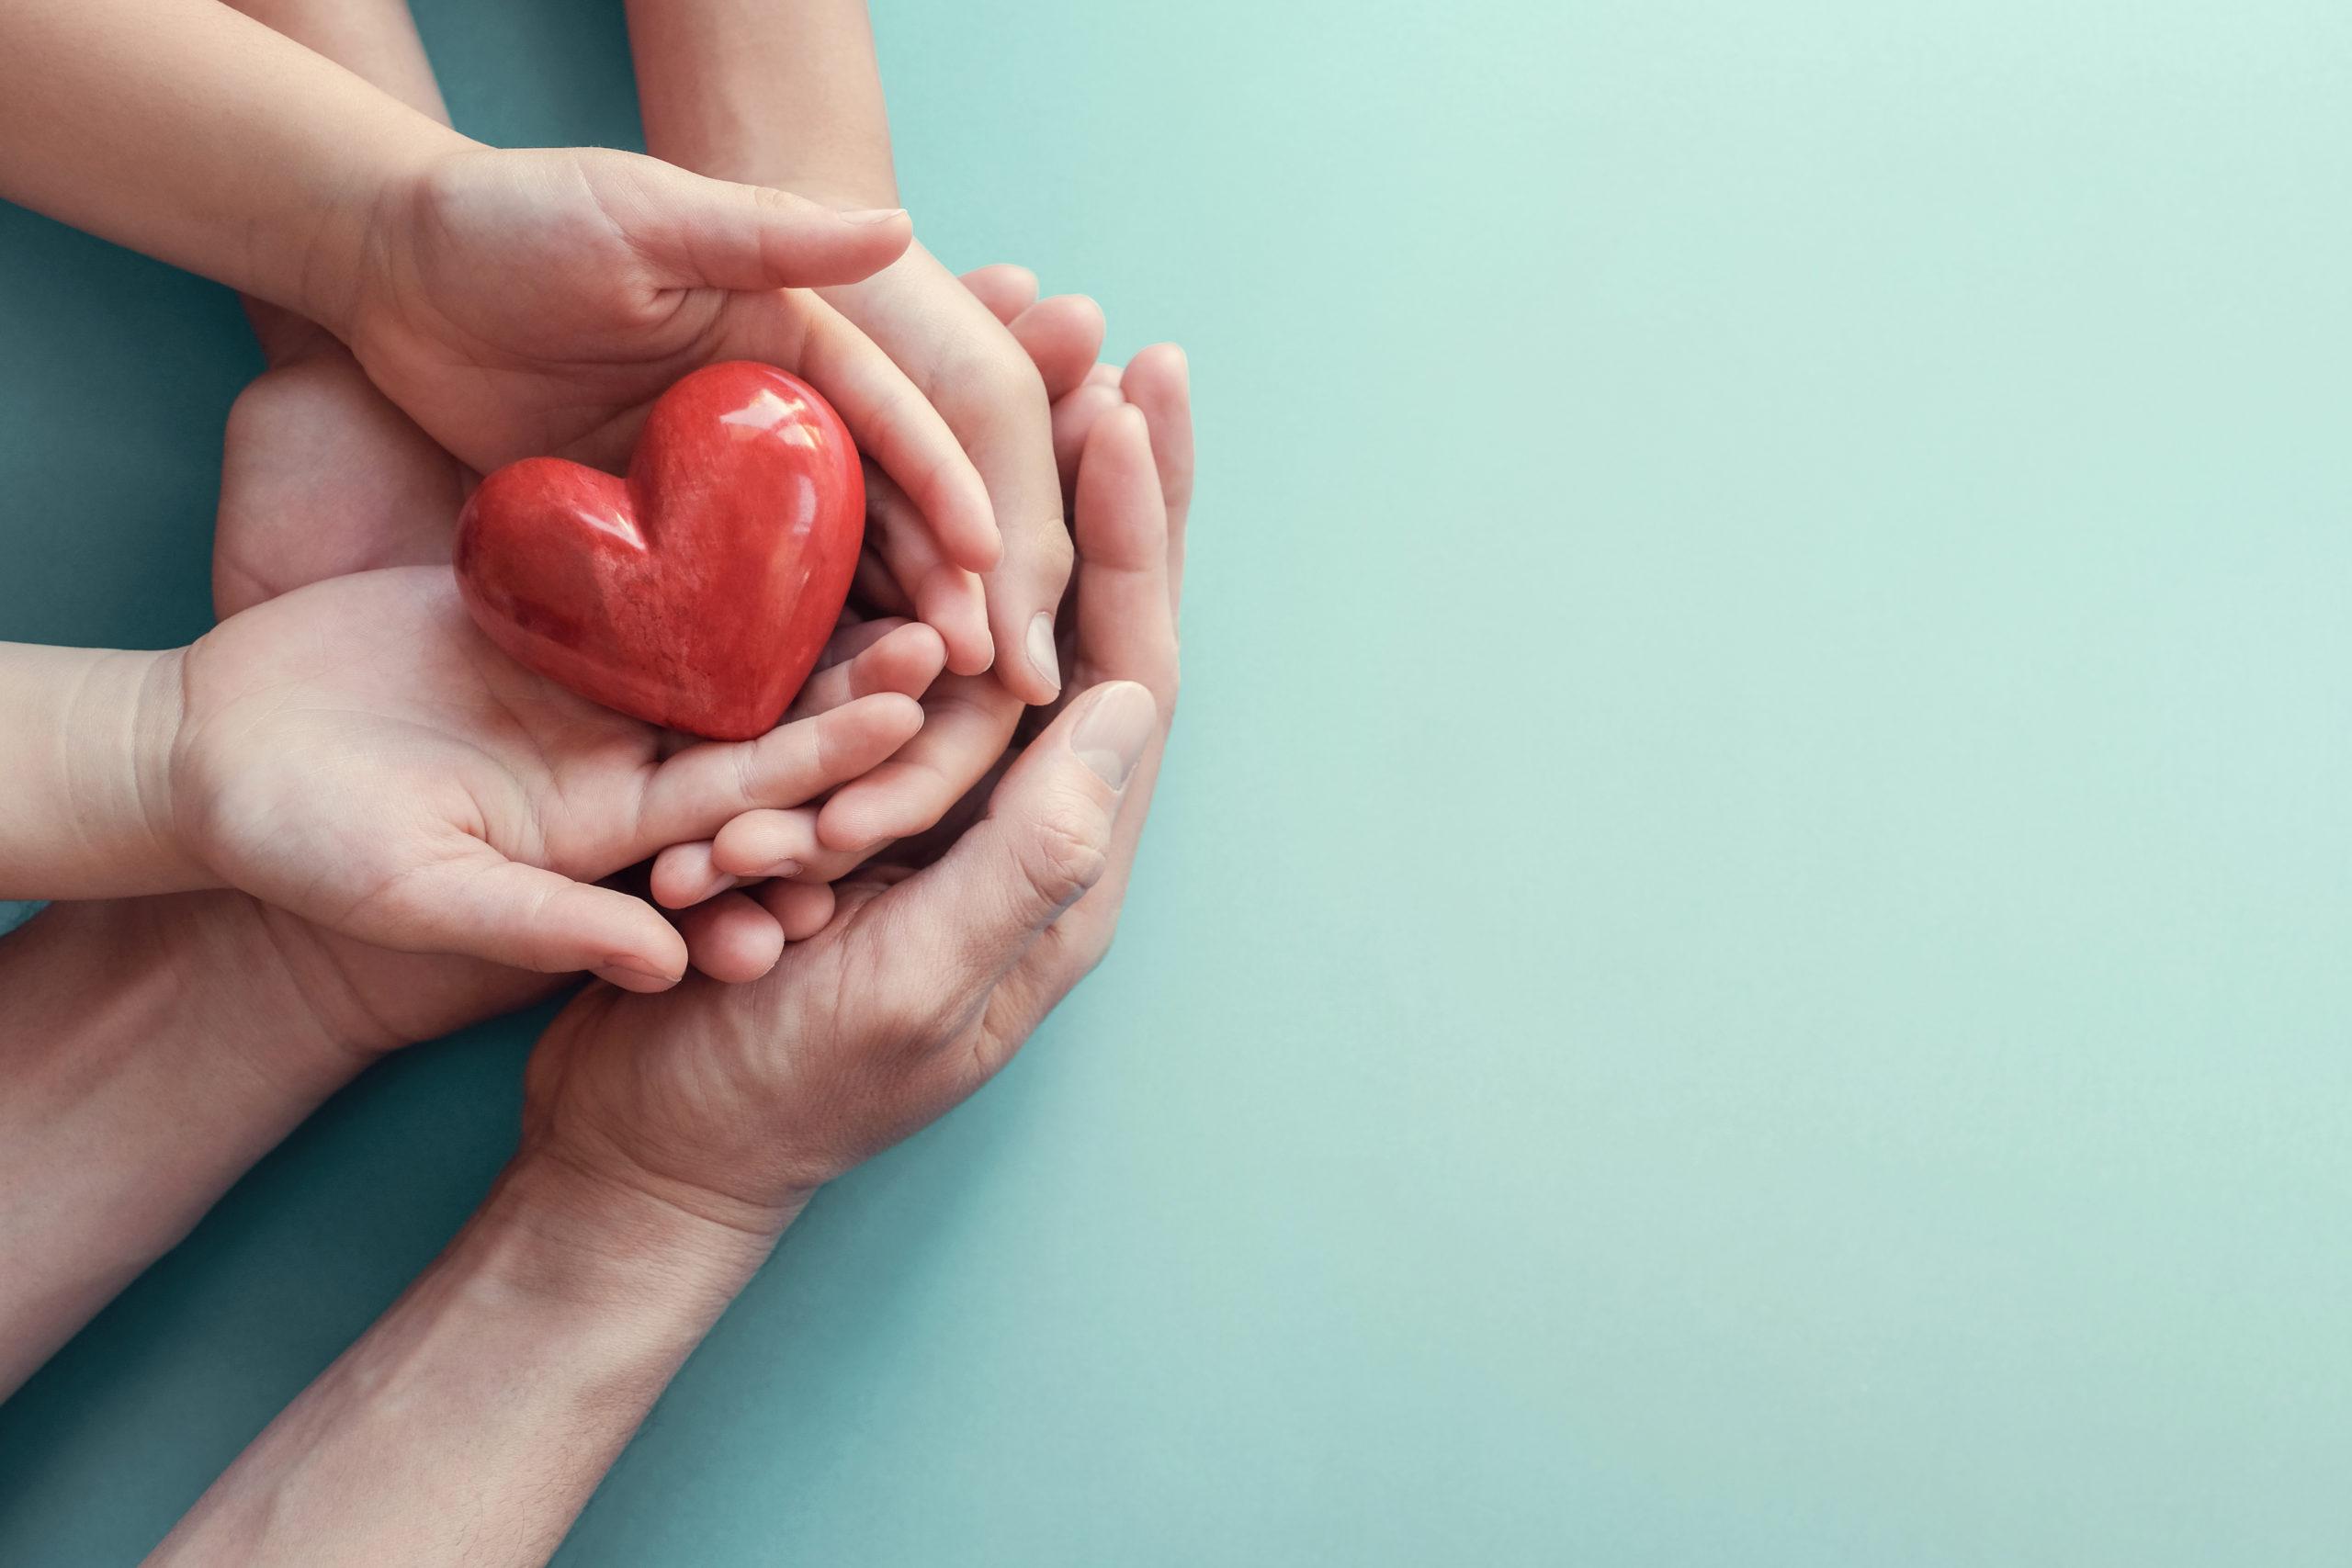 adult and child hands holding red heart on aqua background, 心脏健康, 捐赠, 企业社会责任概念, 世界心脏日, 世界卫生日, 家庭日